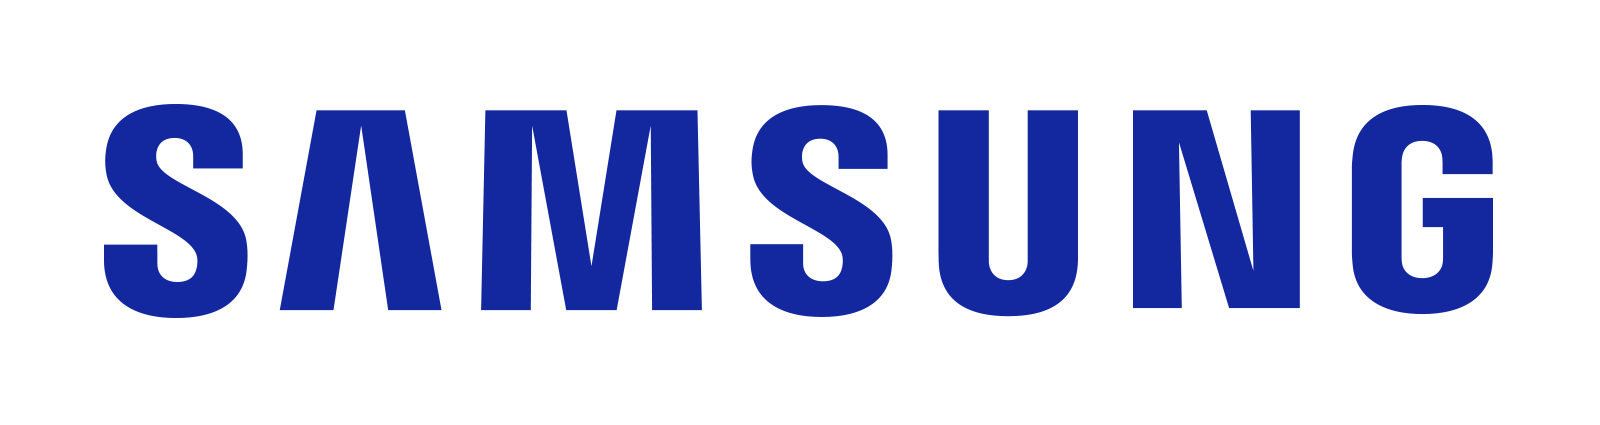 Logo samsung blue